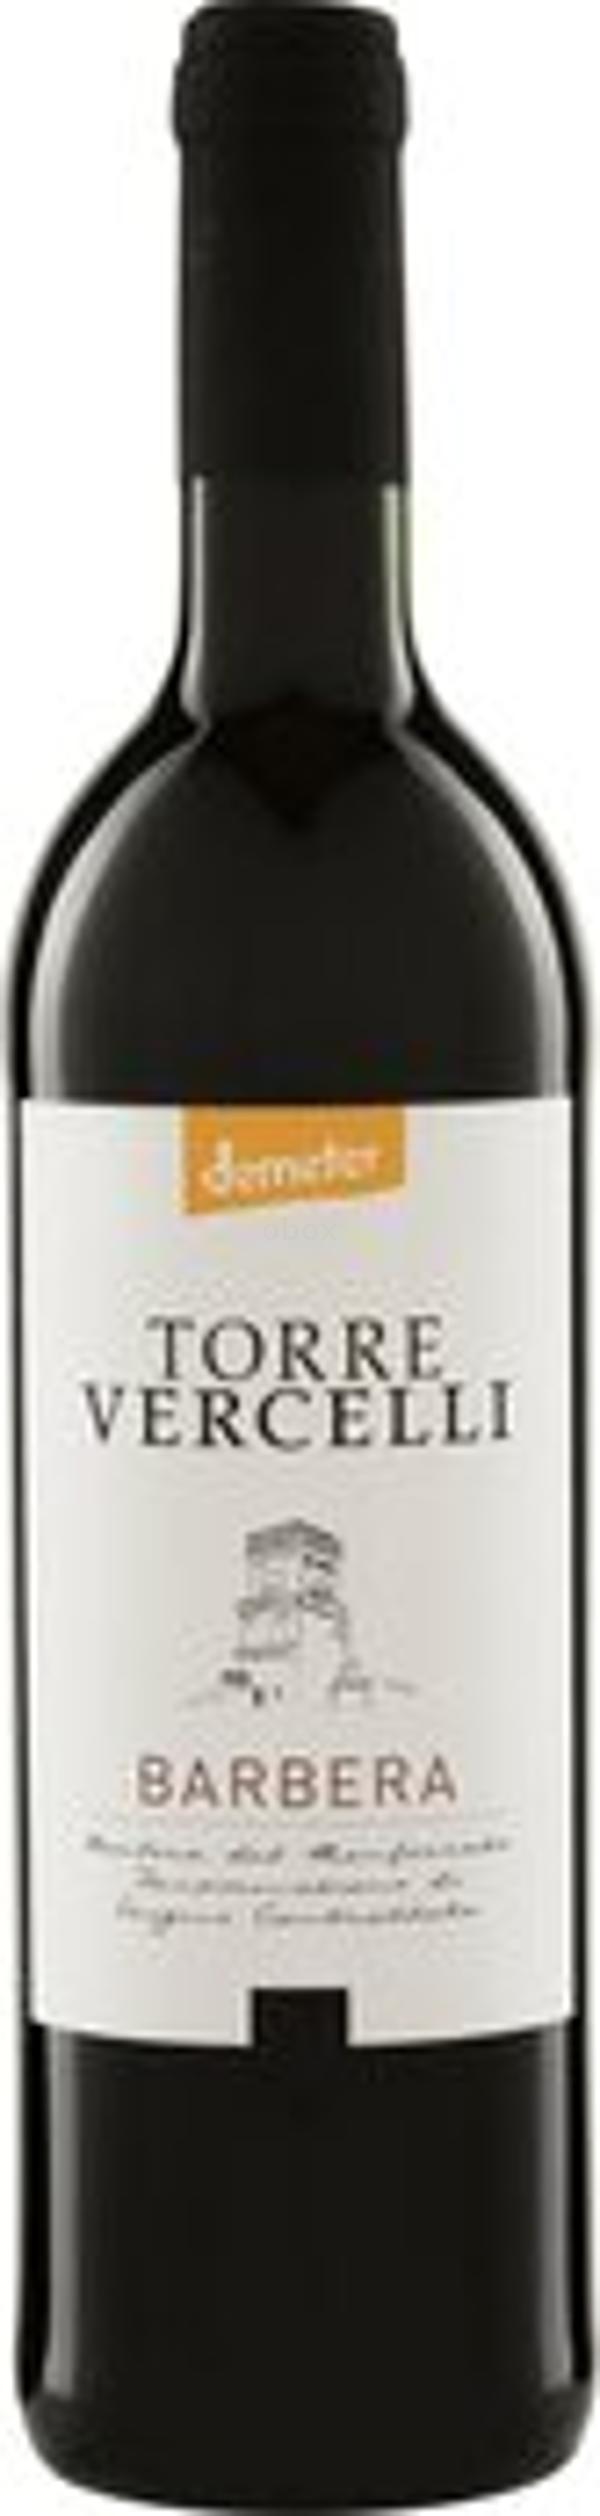 Produktfoto zu TORRE VERCELLI Barbera Demeter DOC, Rotwein trocken 0,75l